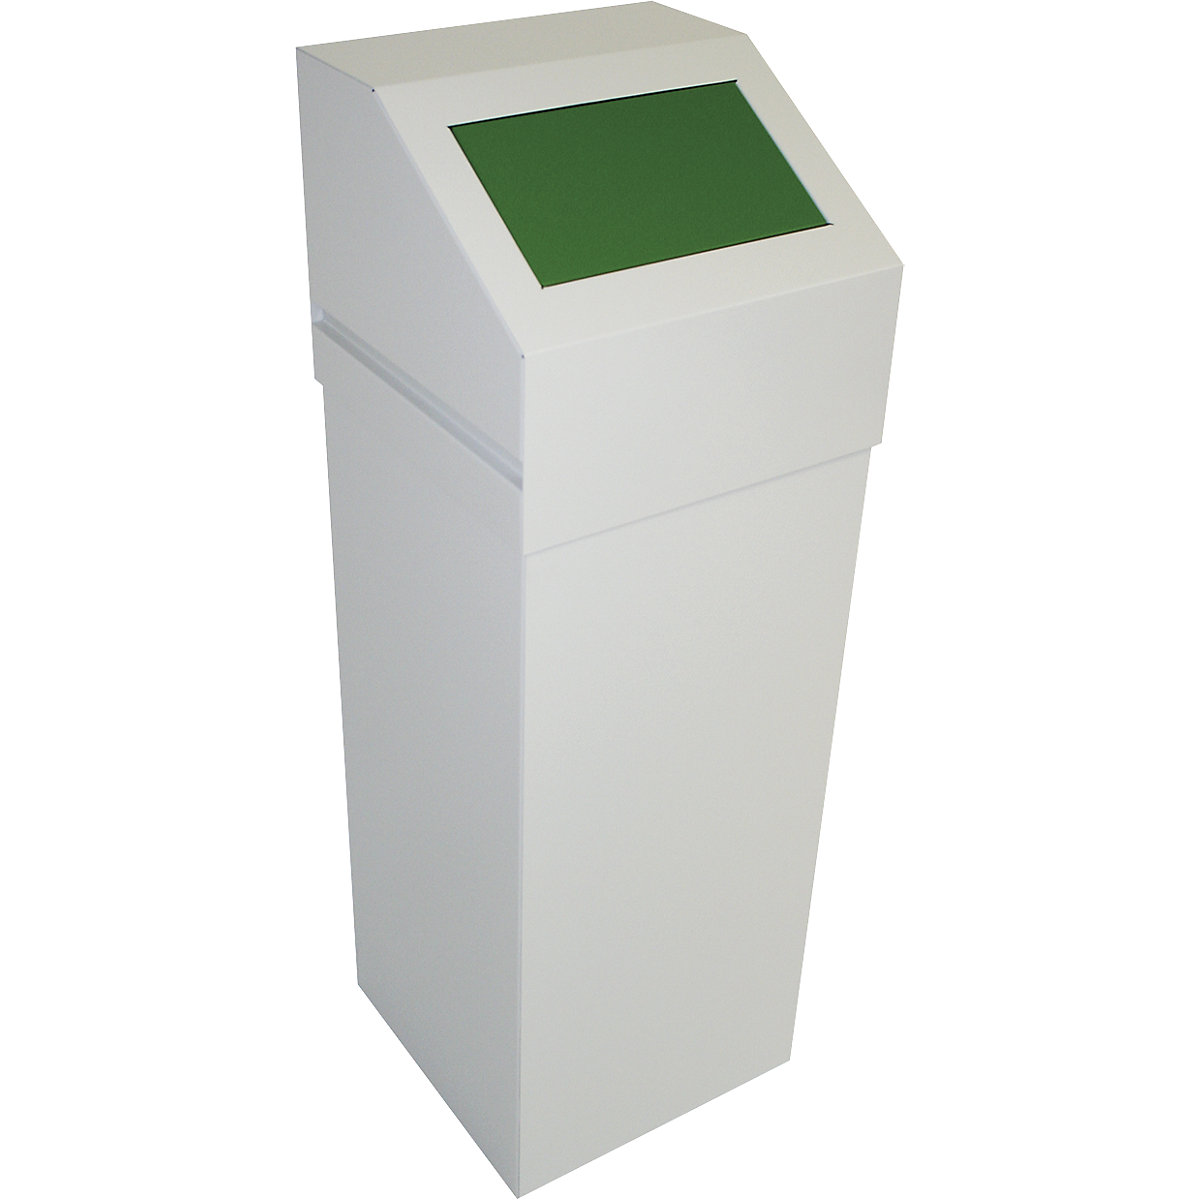 Afvalscheidingssysteem, inhoud 65 l, met groene deksel-3